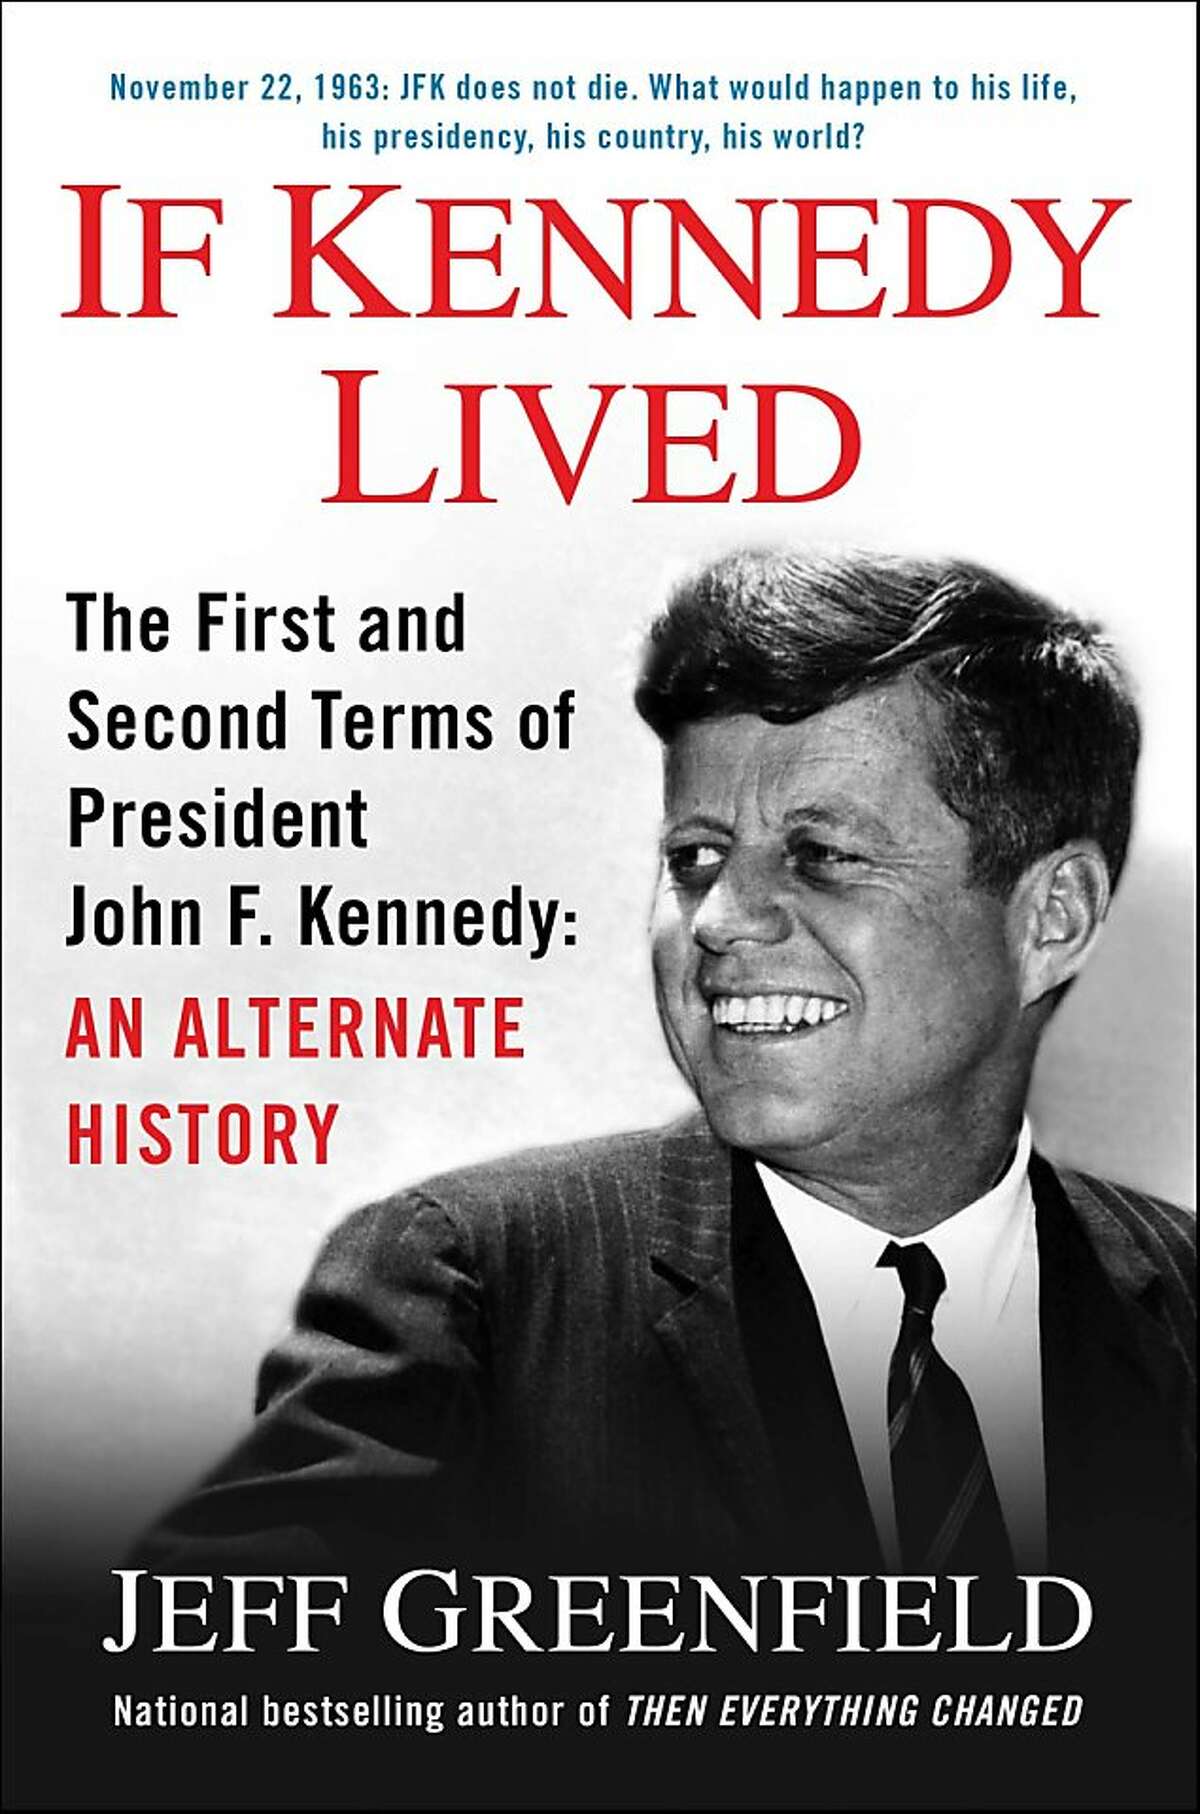 Range of books revisit Kennedy era, Dallas, legacy